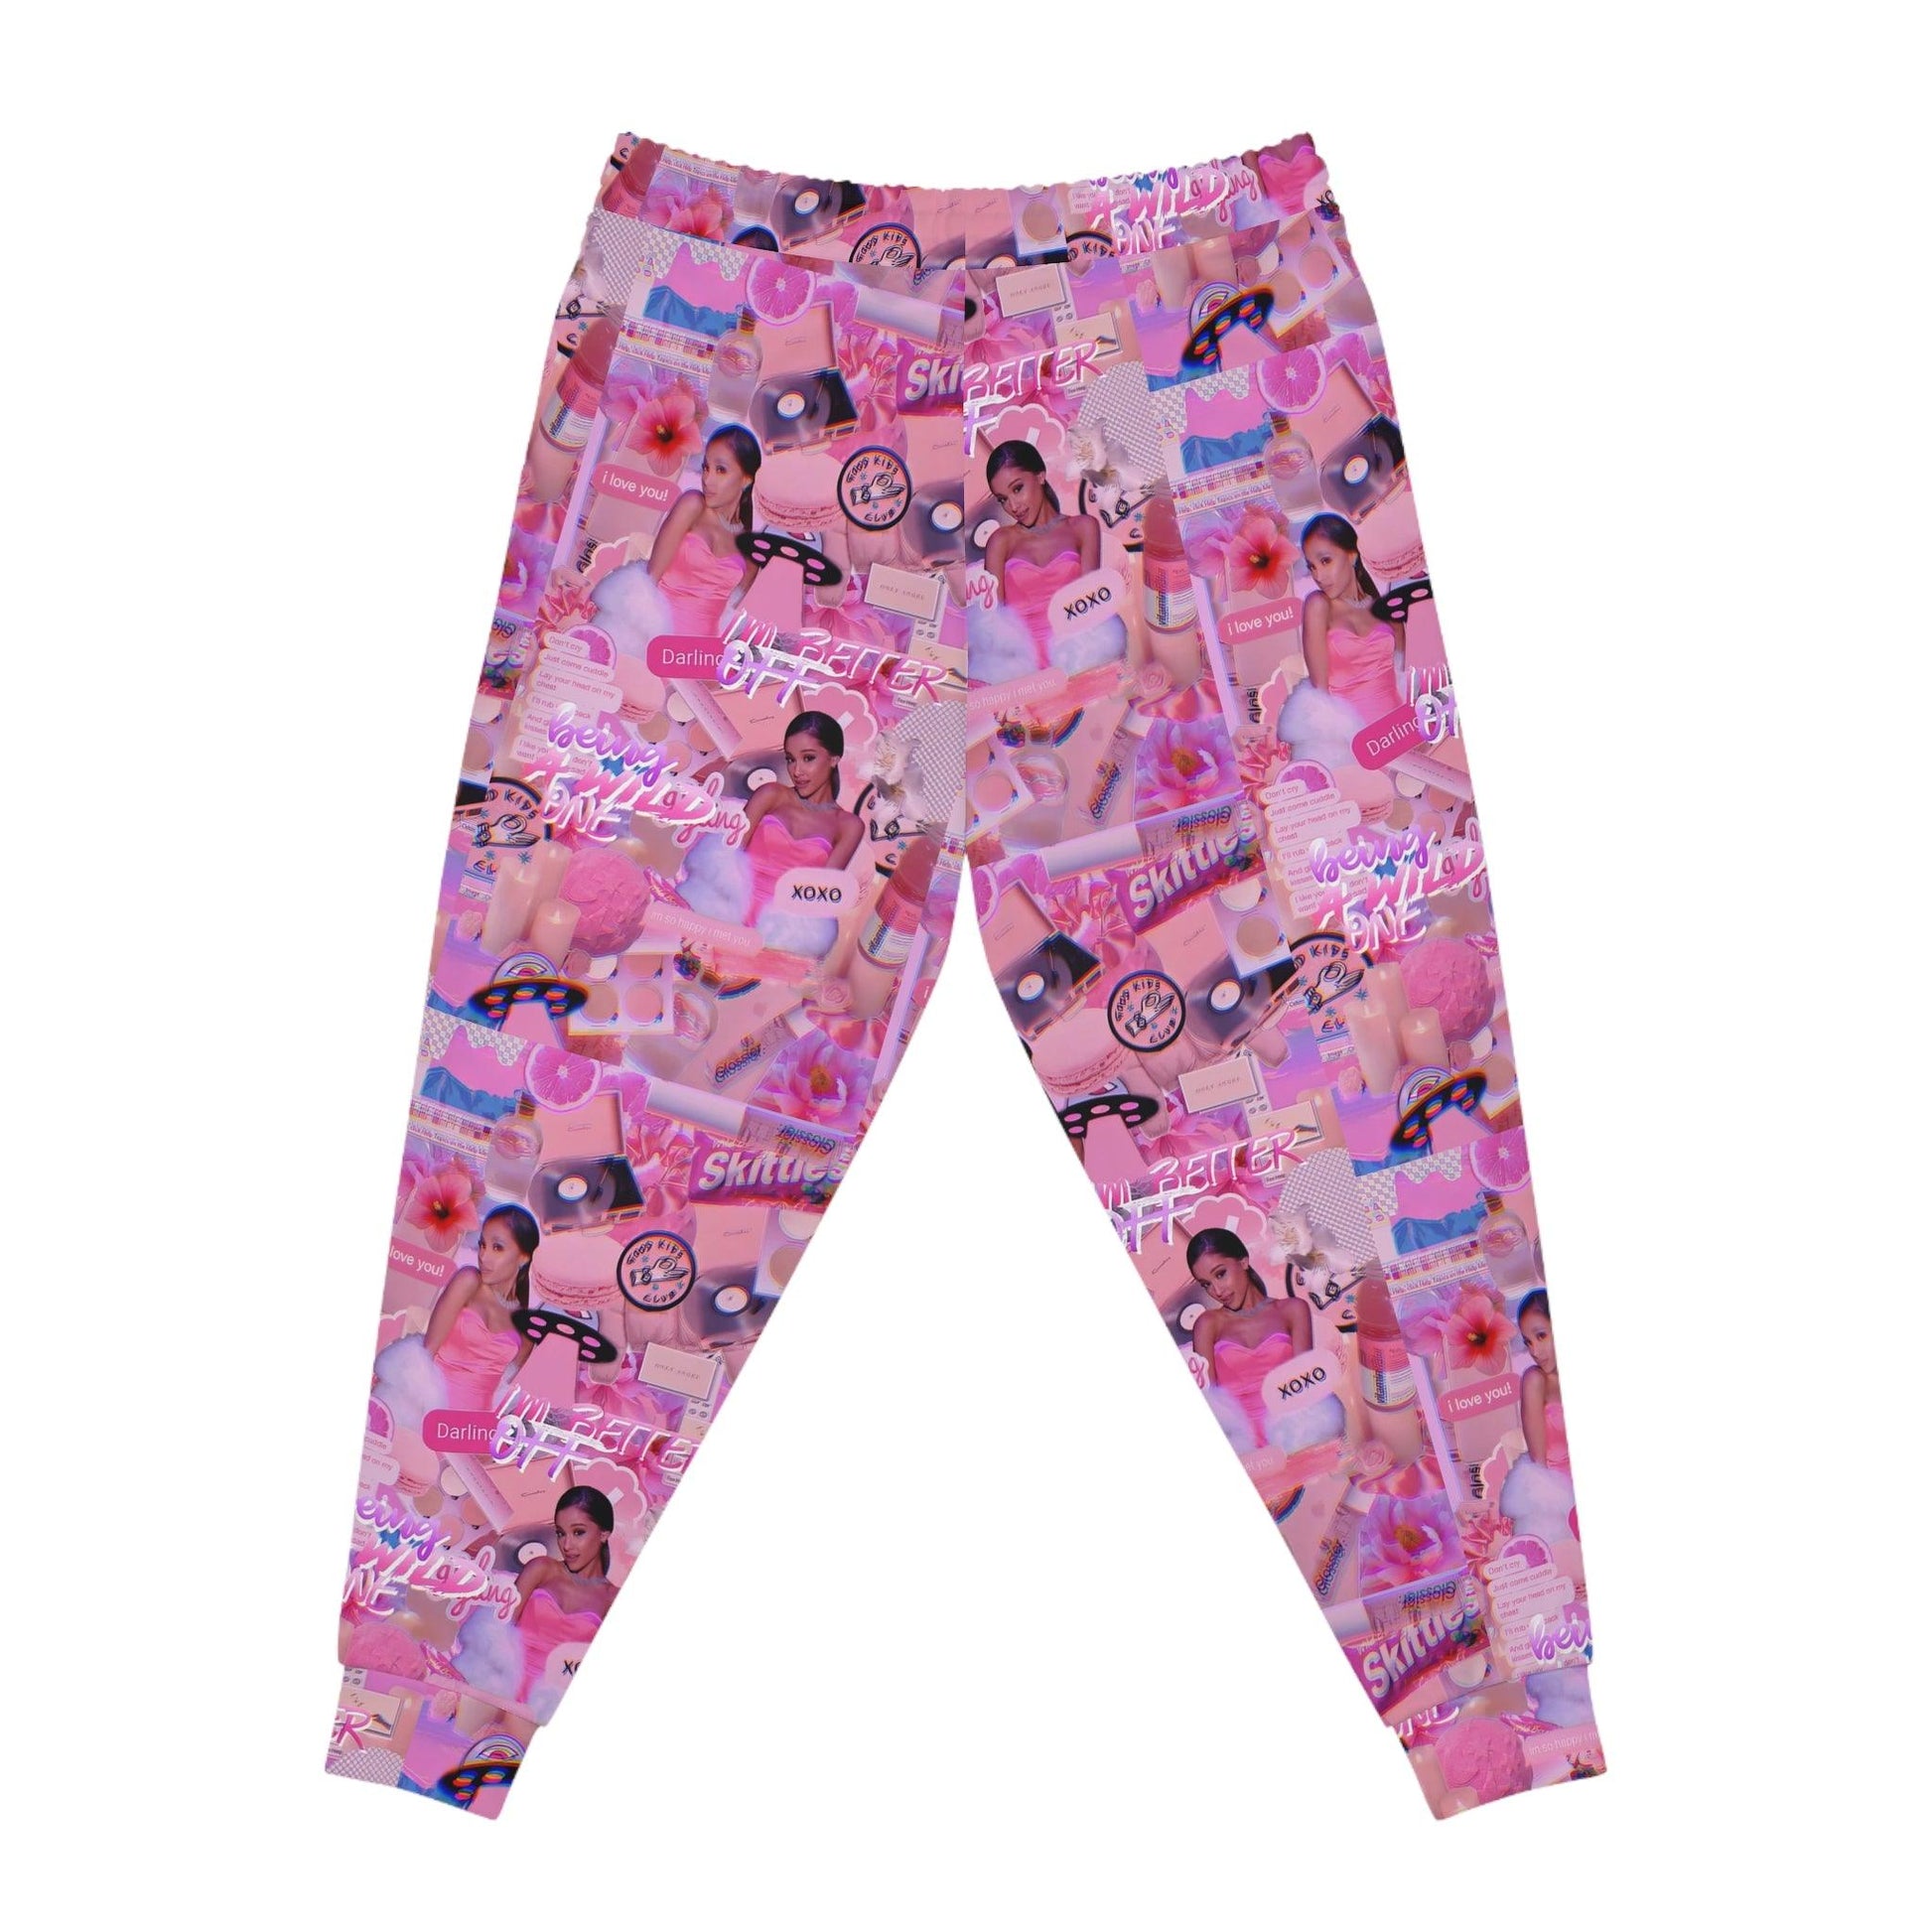 Ariana Grande Purple Vibes Collage Athletic Jogger Sweatpants - Fandom Flair